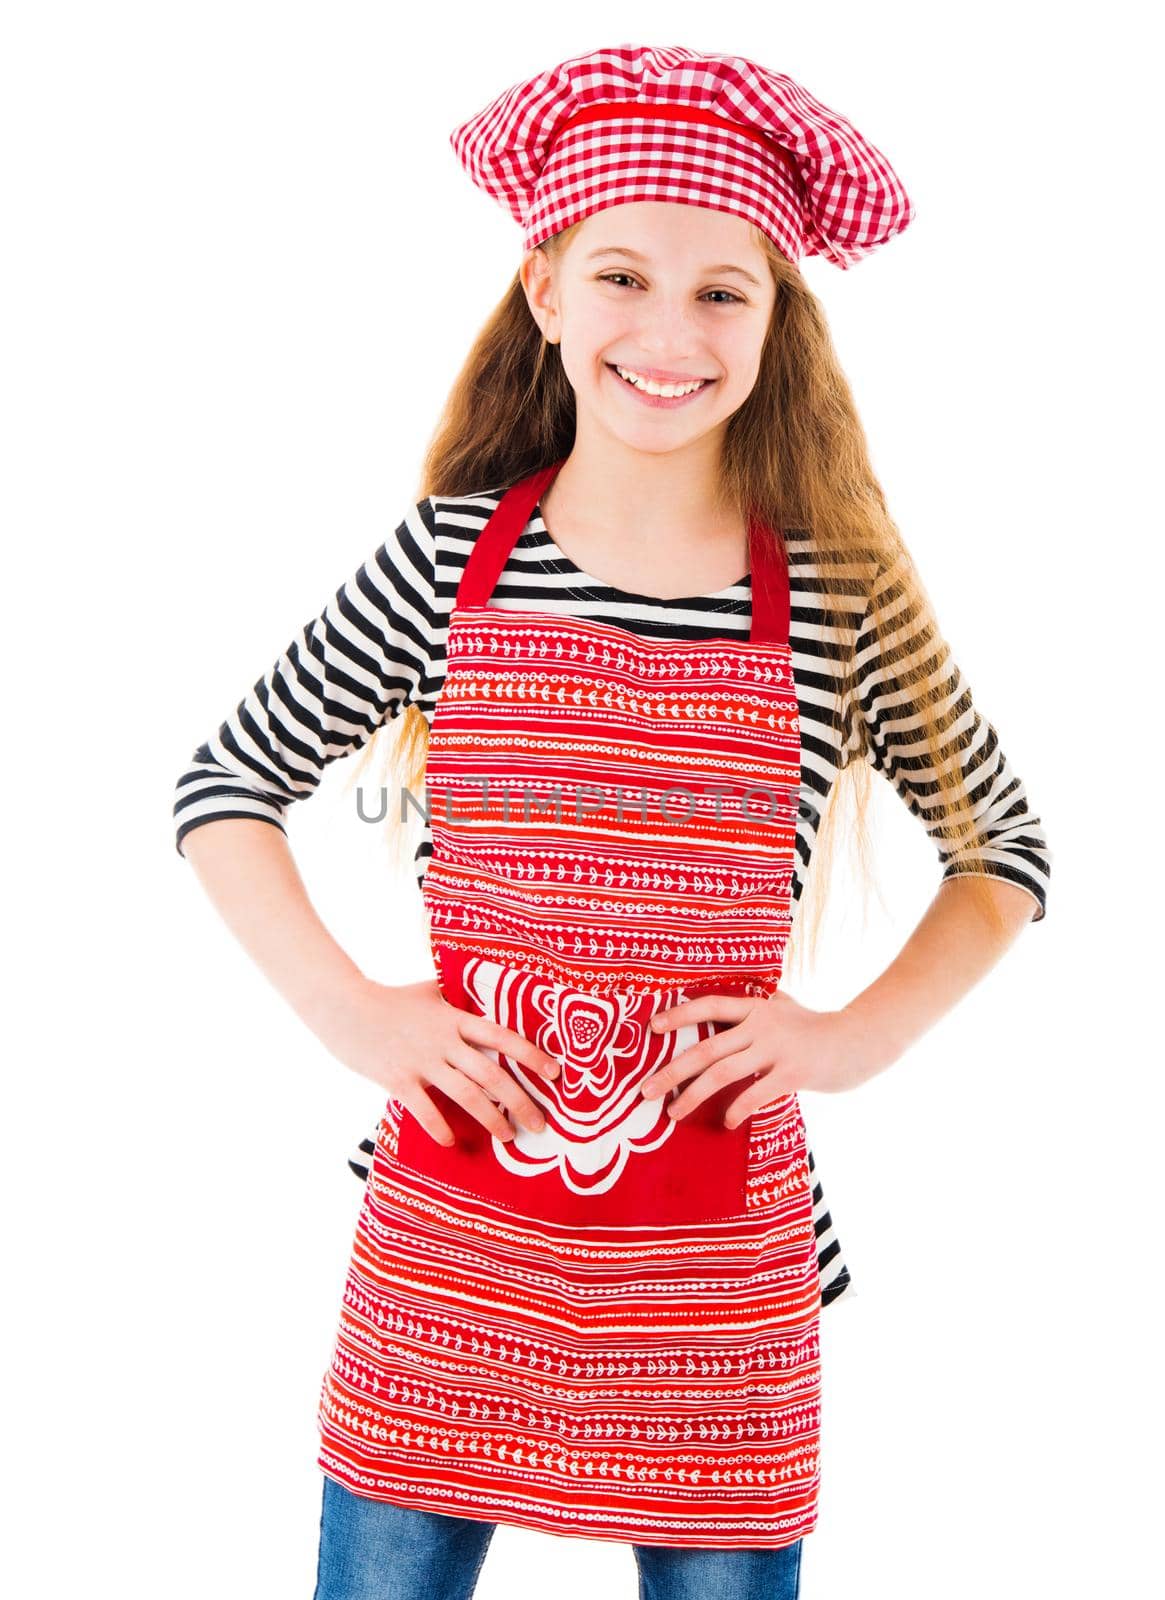 Little girl in red chef uniform smiles by GekaSkr